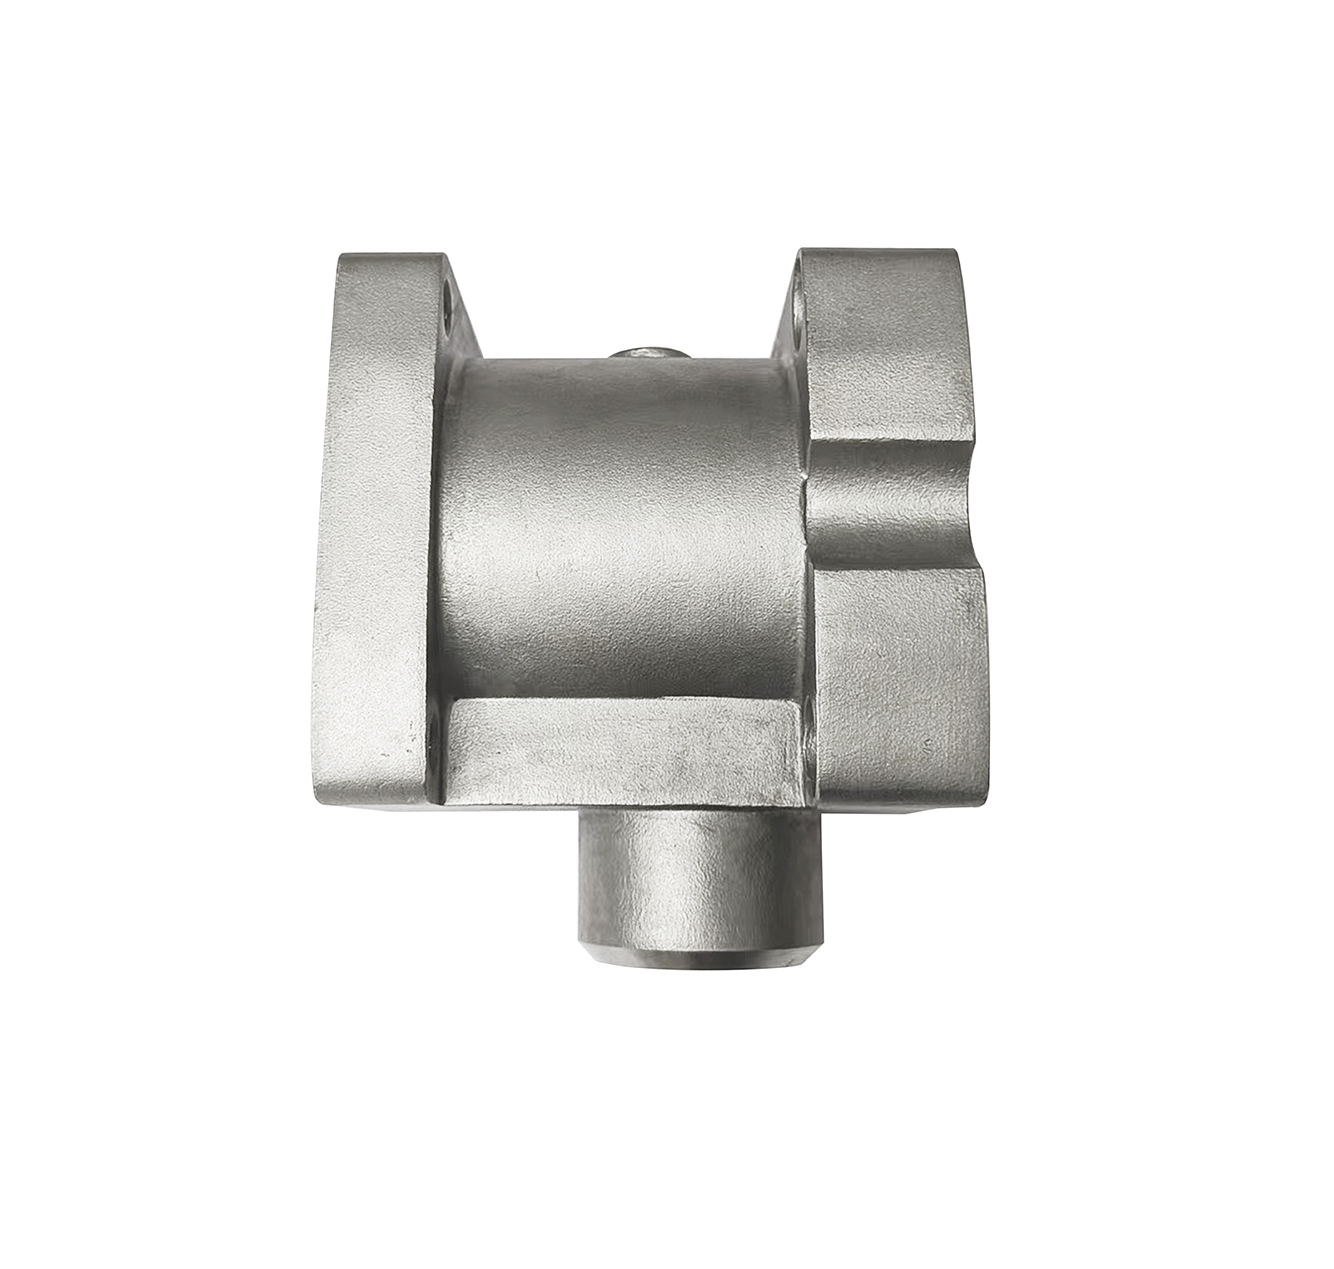 Stainless steel pressure valve housing parts